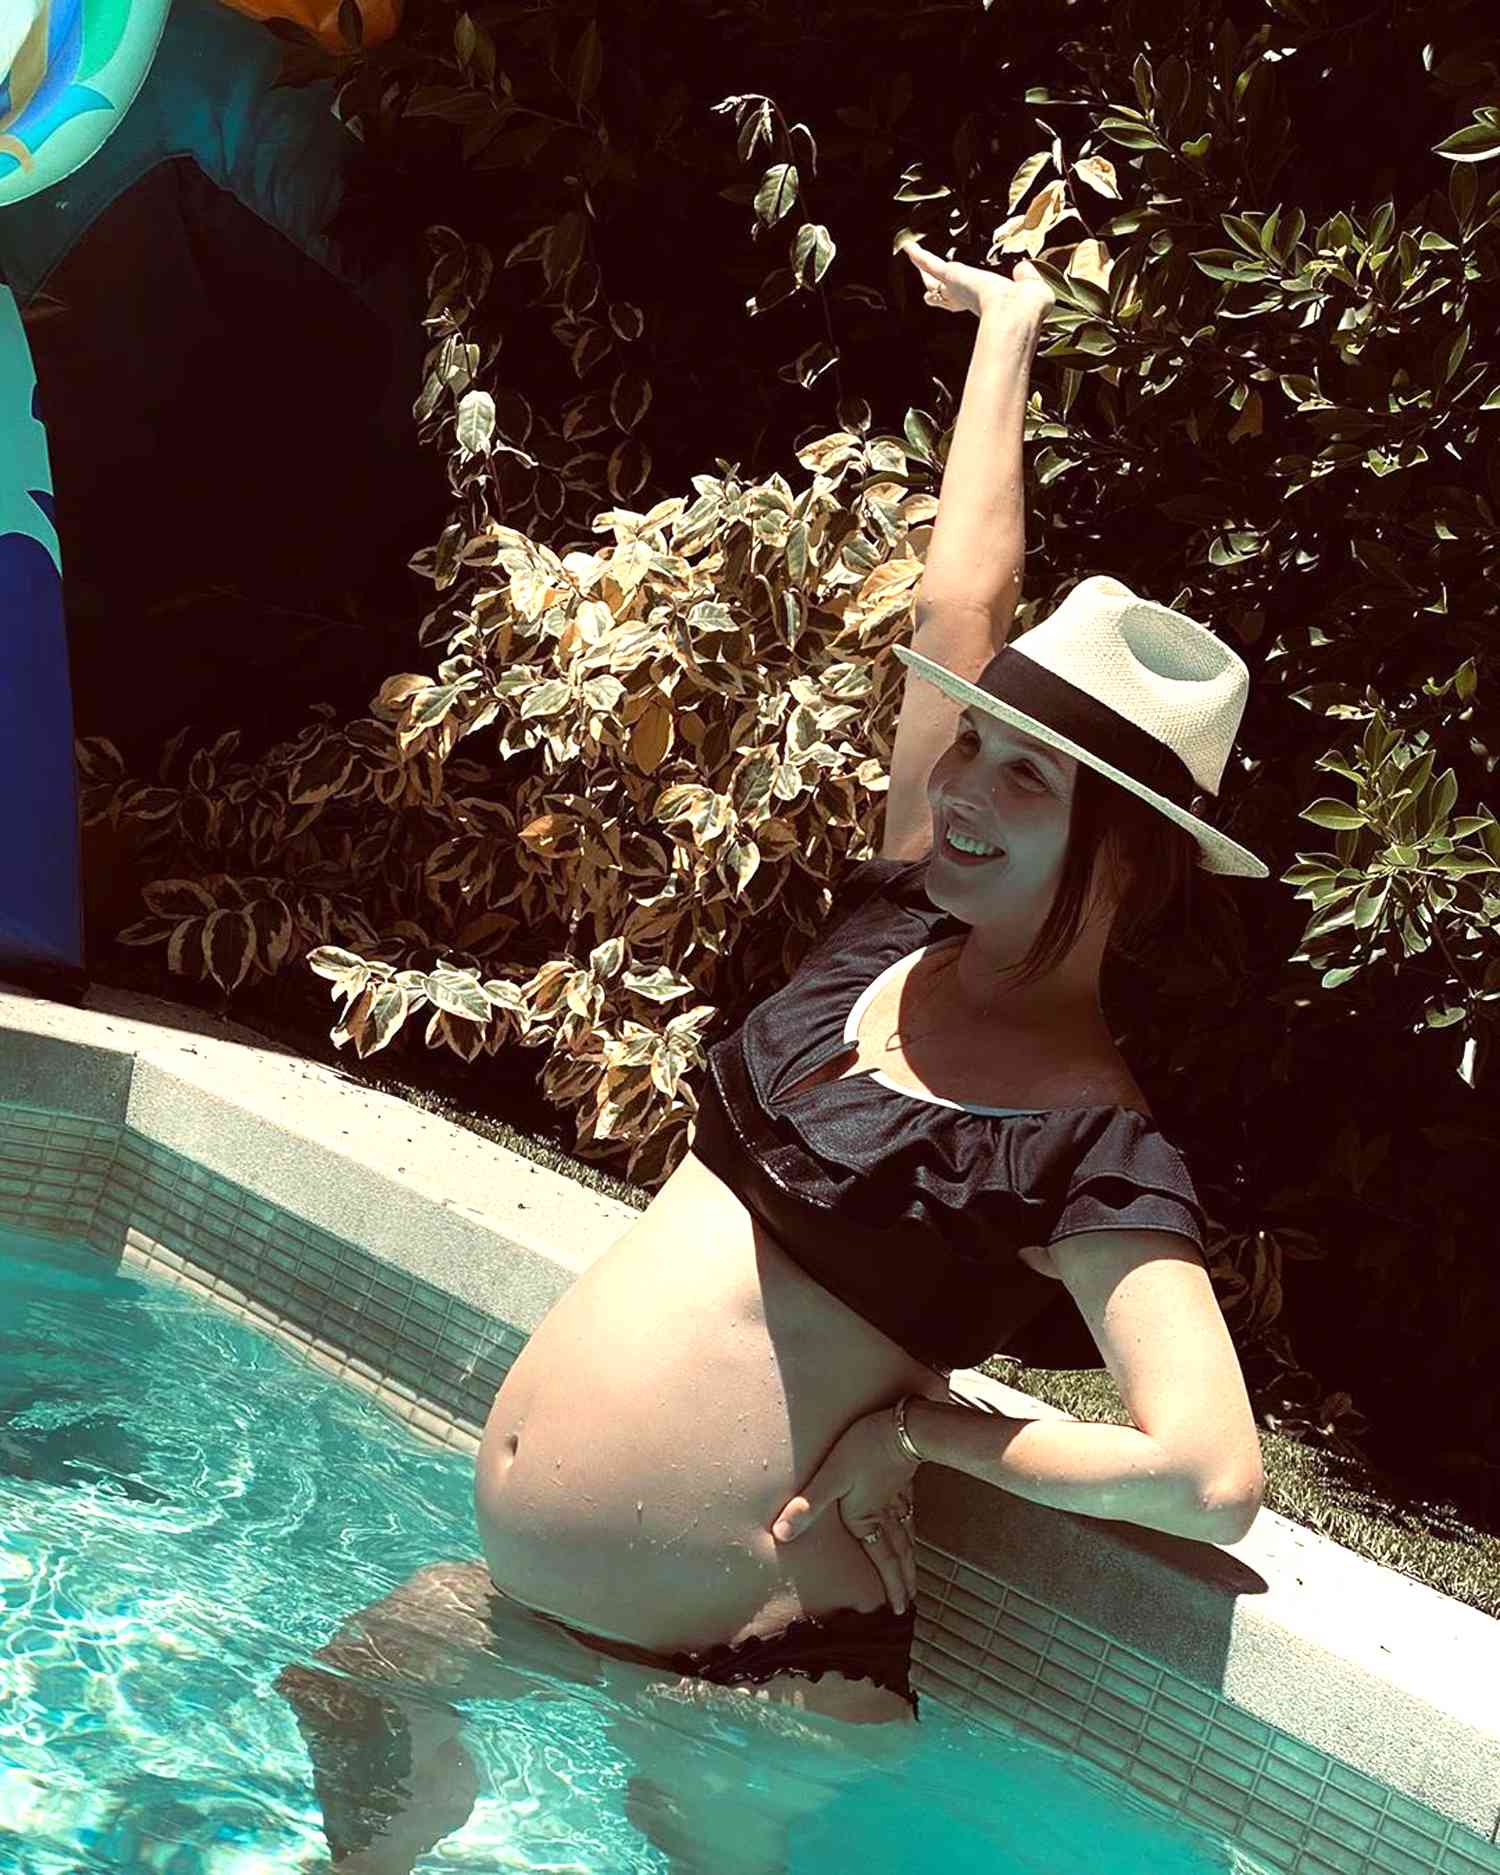 carlea jenkins share camilla luddington bikini photos